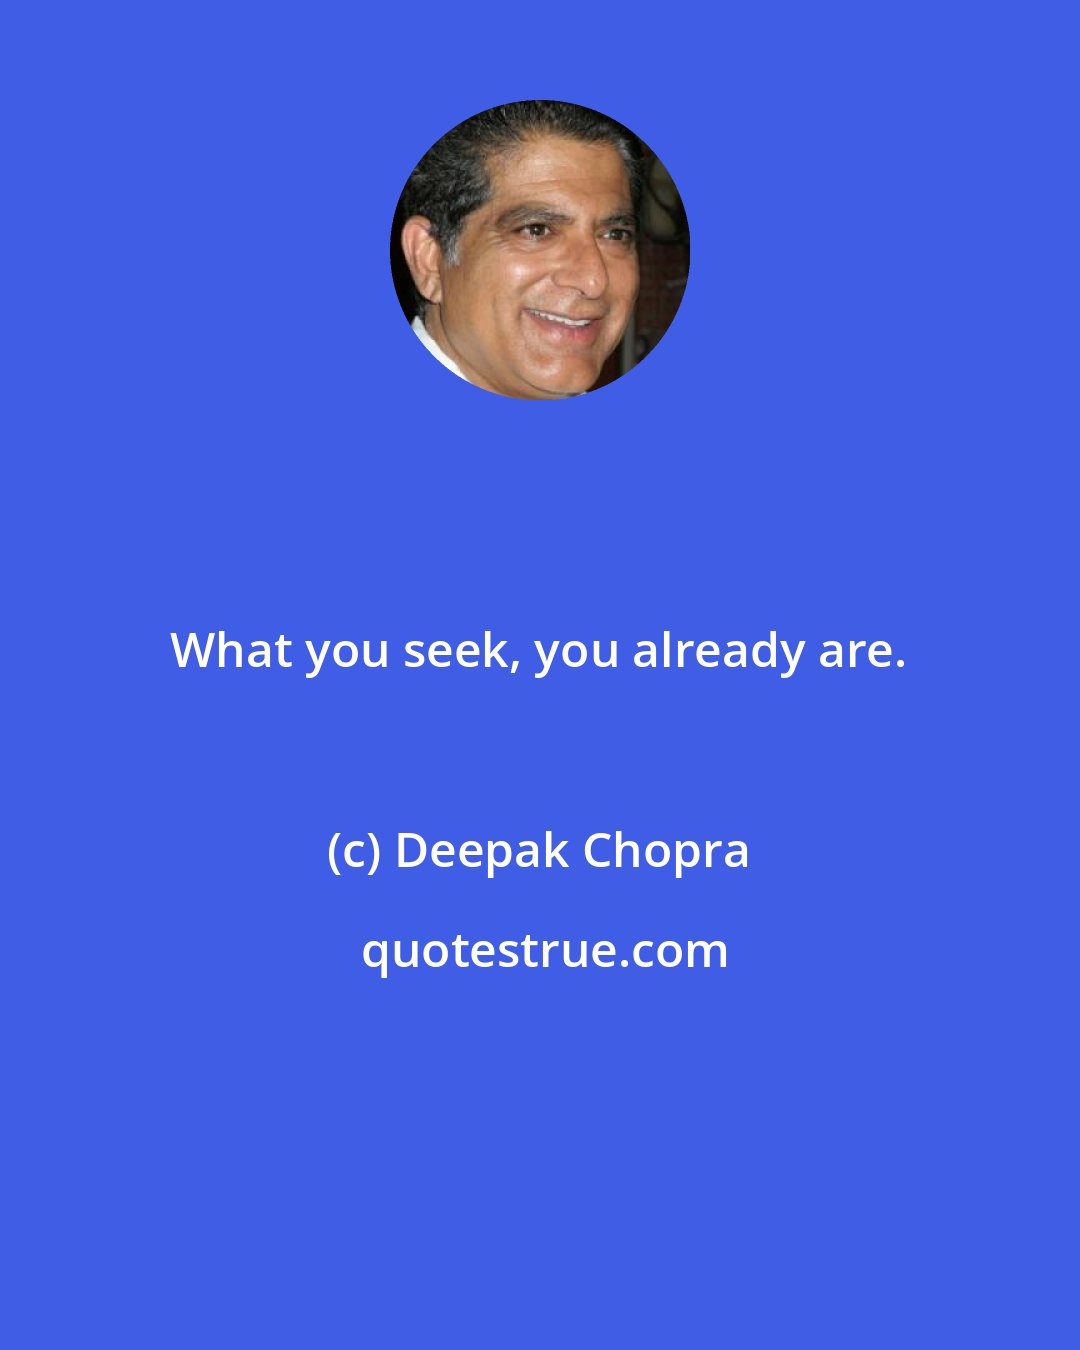 Deepak Chopra: What you seek, you already are.